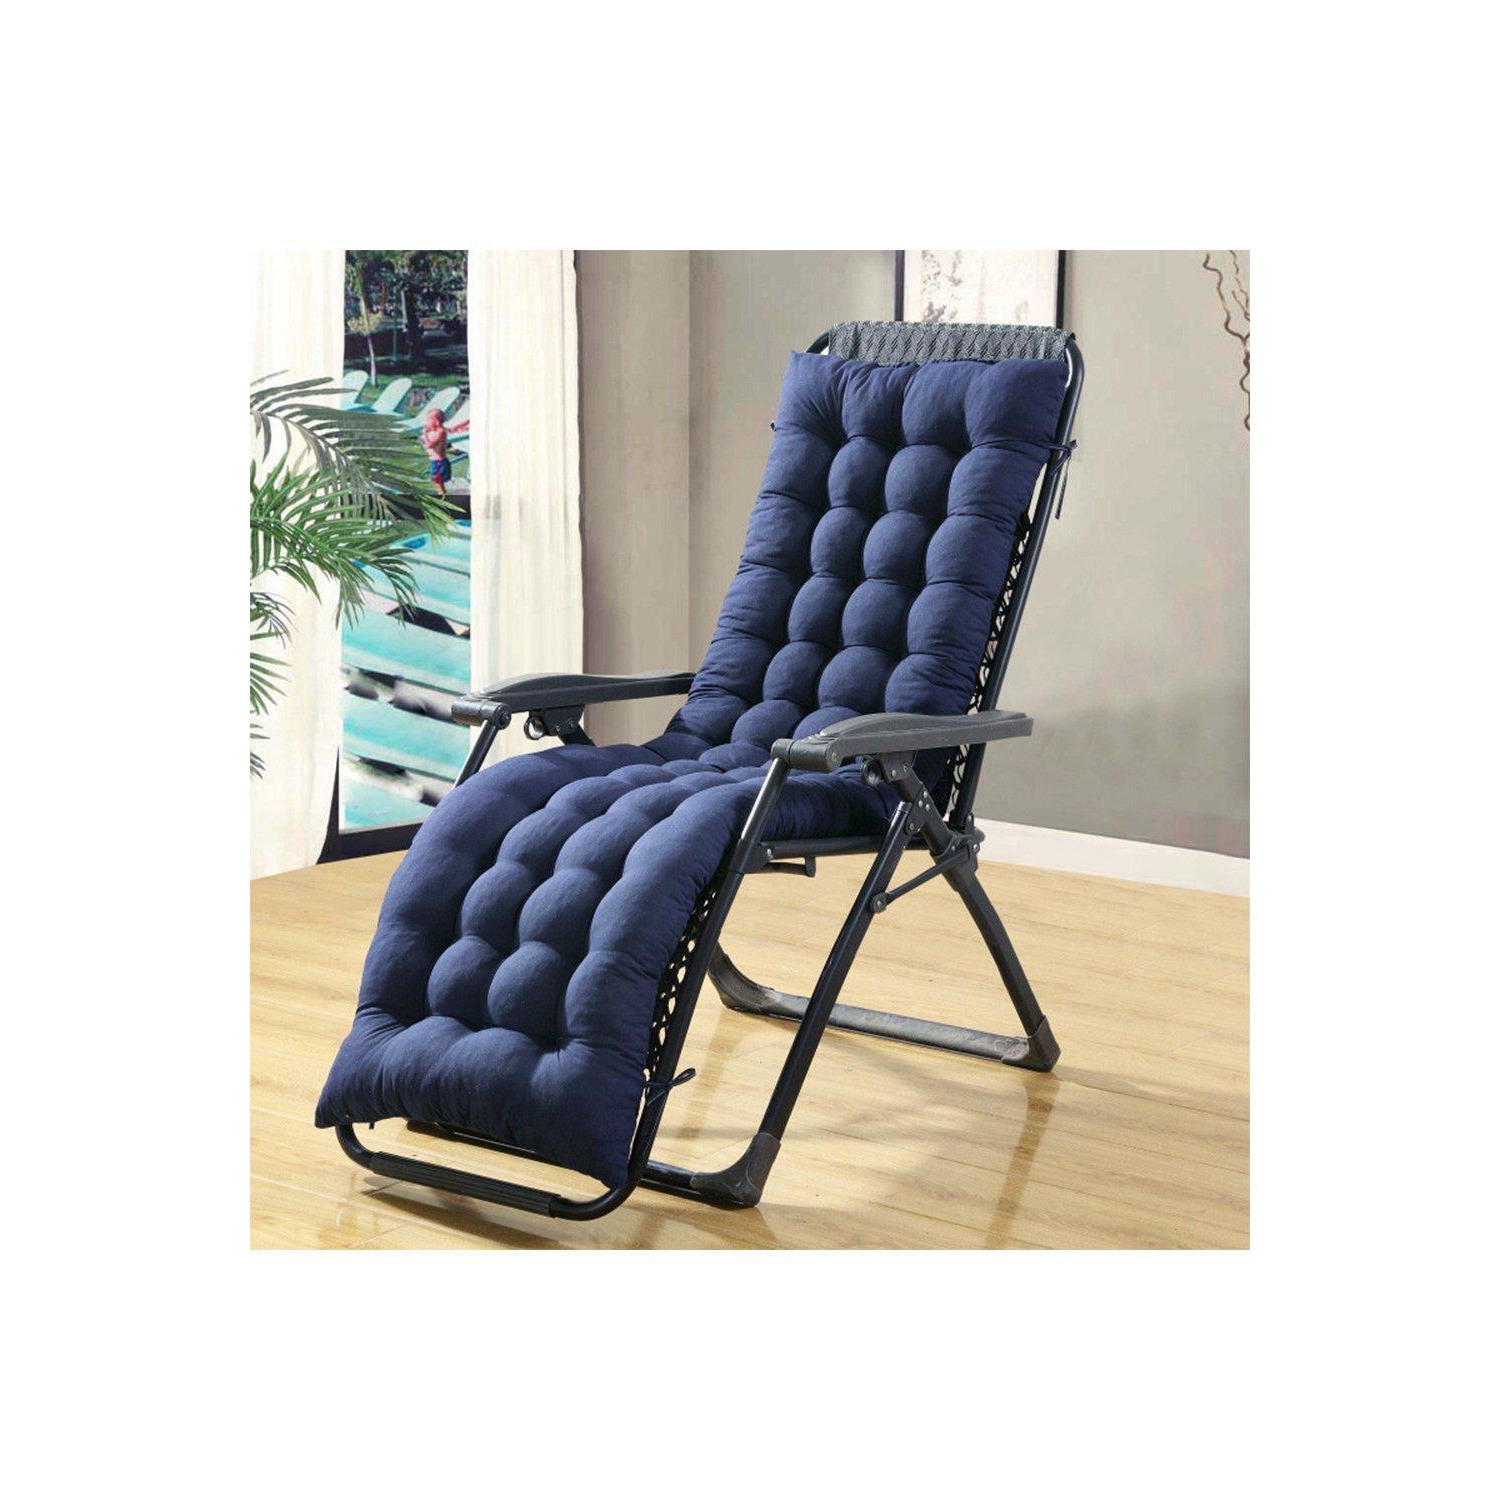 160cm W x 50cm D  Dark Blue Garden Lounger Seat Cushion - image 1